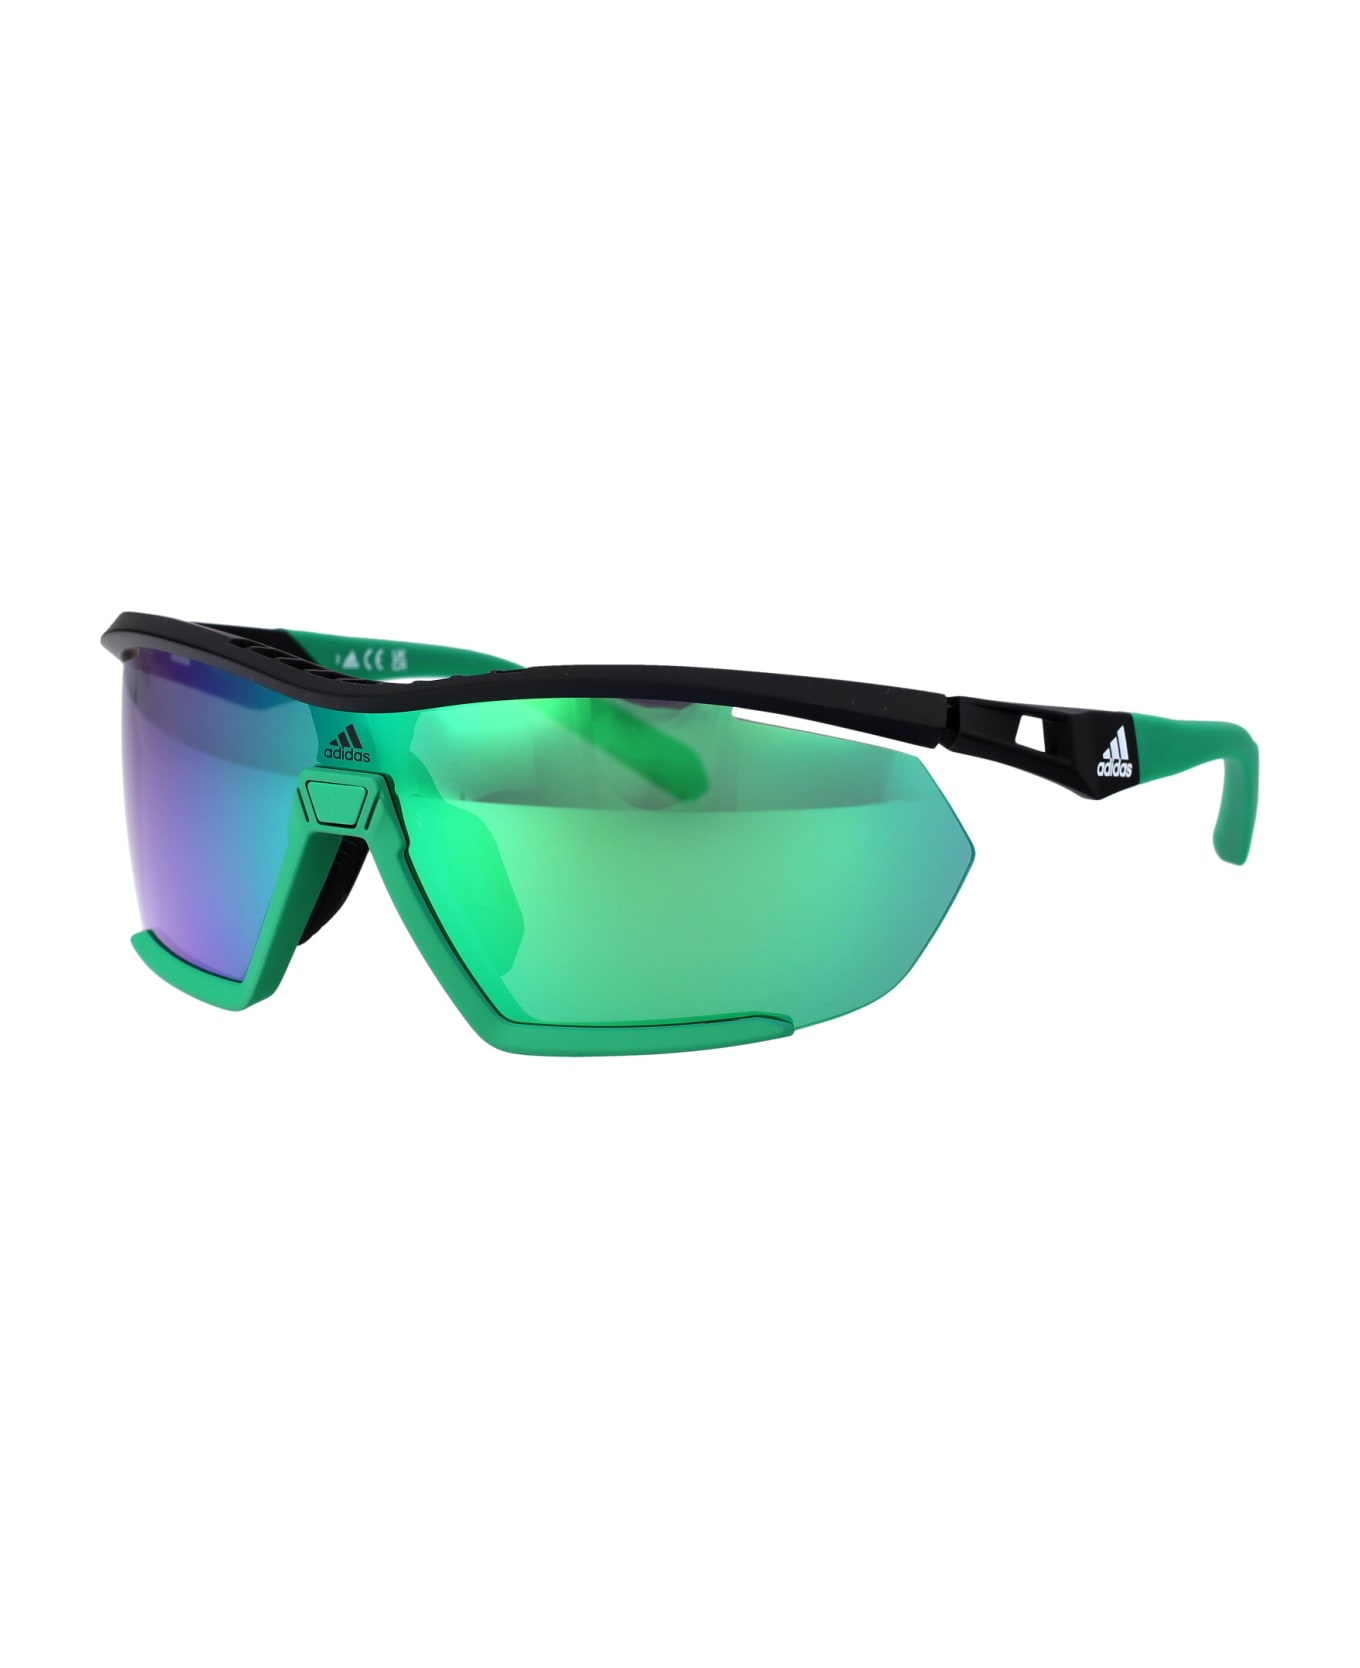 Adidas Cmpt Aero Li Sunglasses - 05Q Nero/Altro/Verde Specchiato